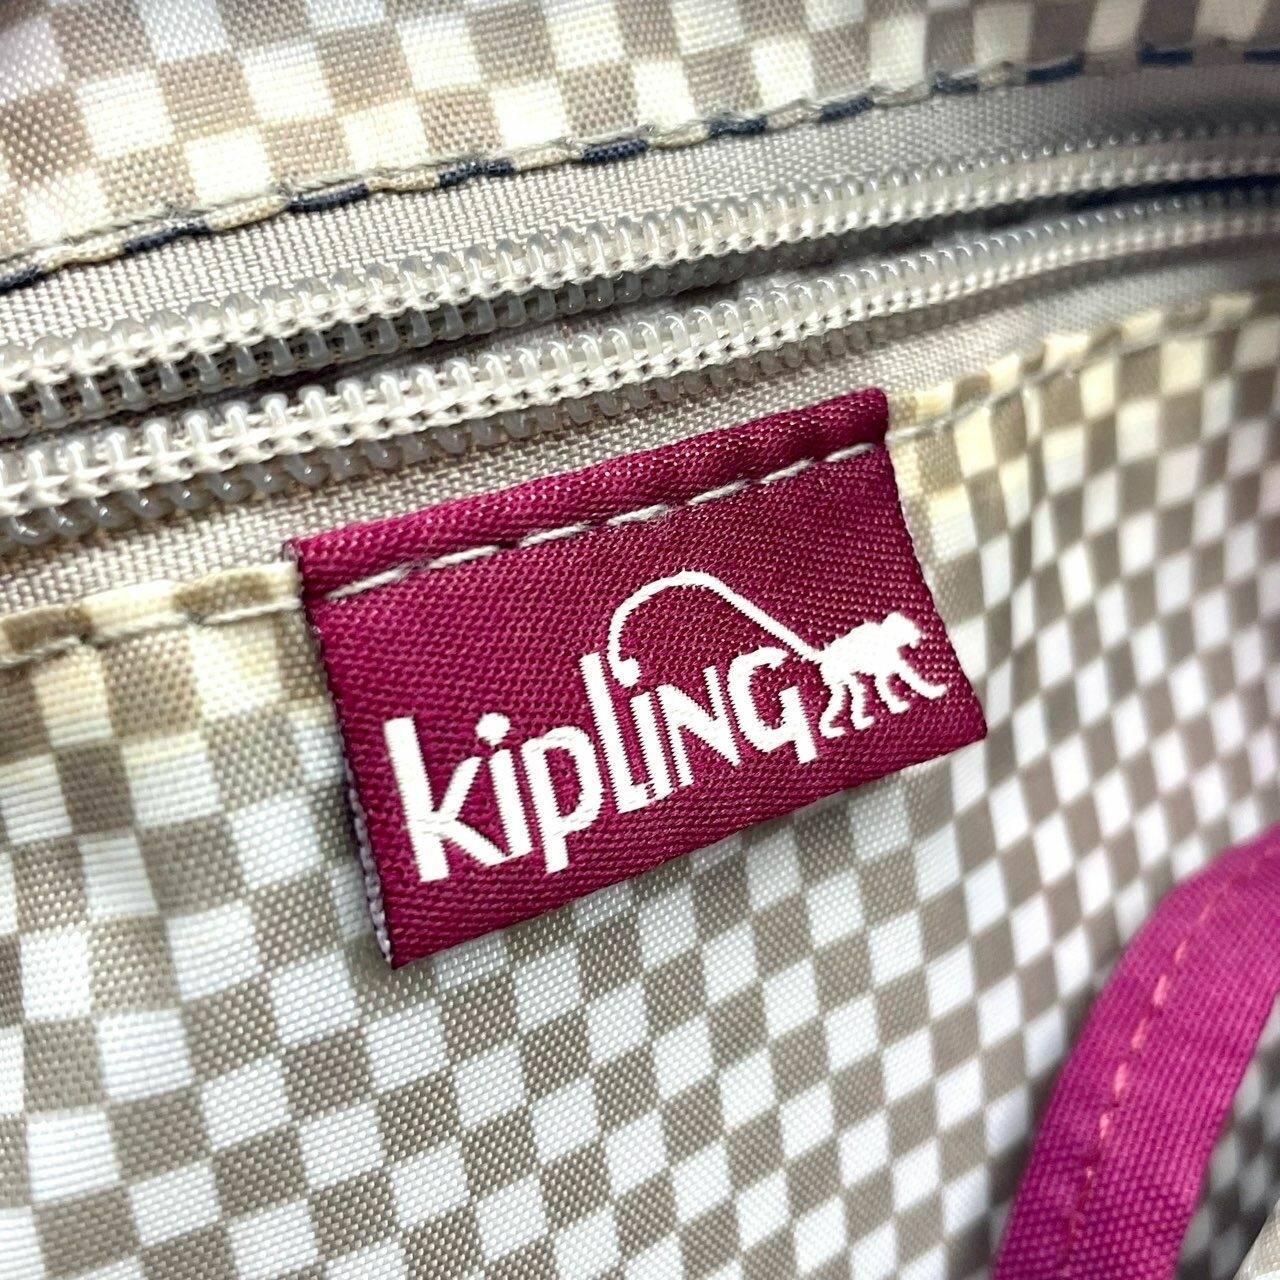 Kipling Purple Light Weight Medium Sling Bag